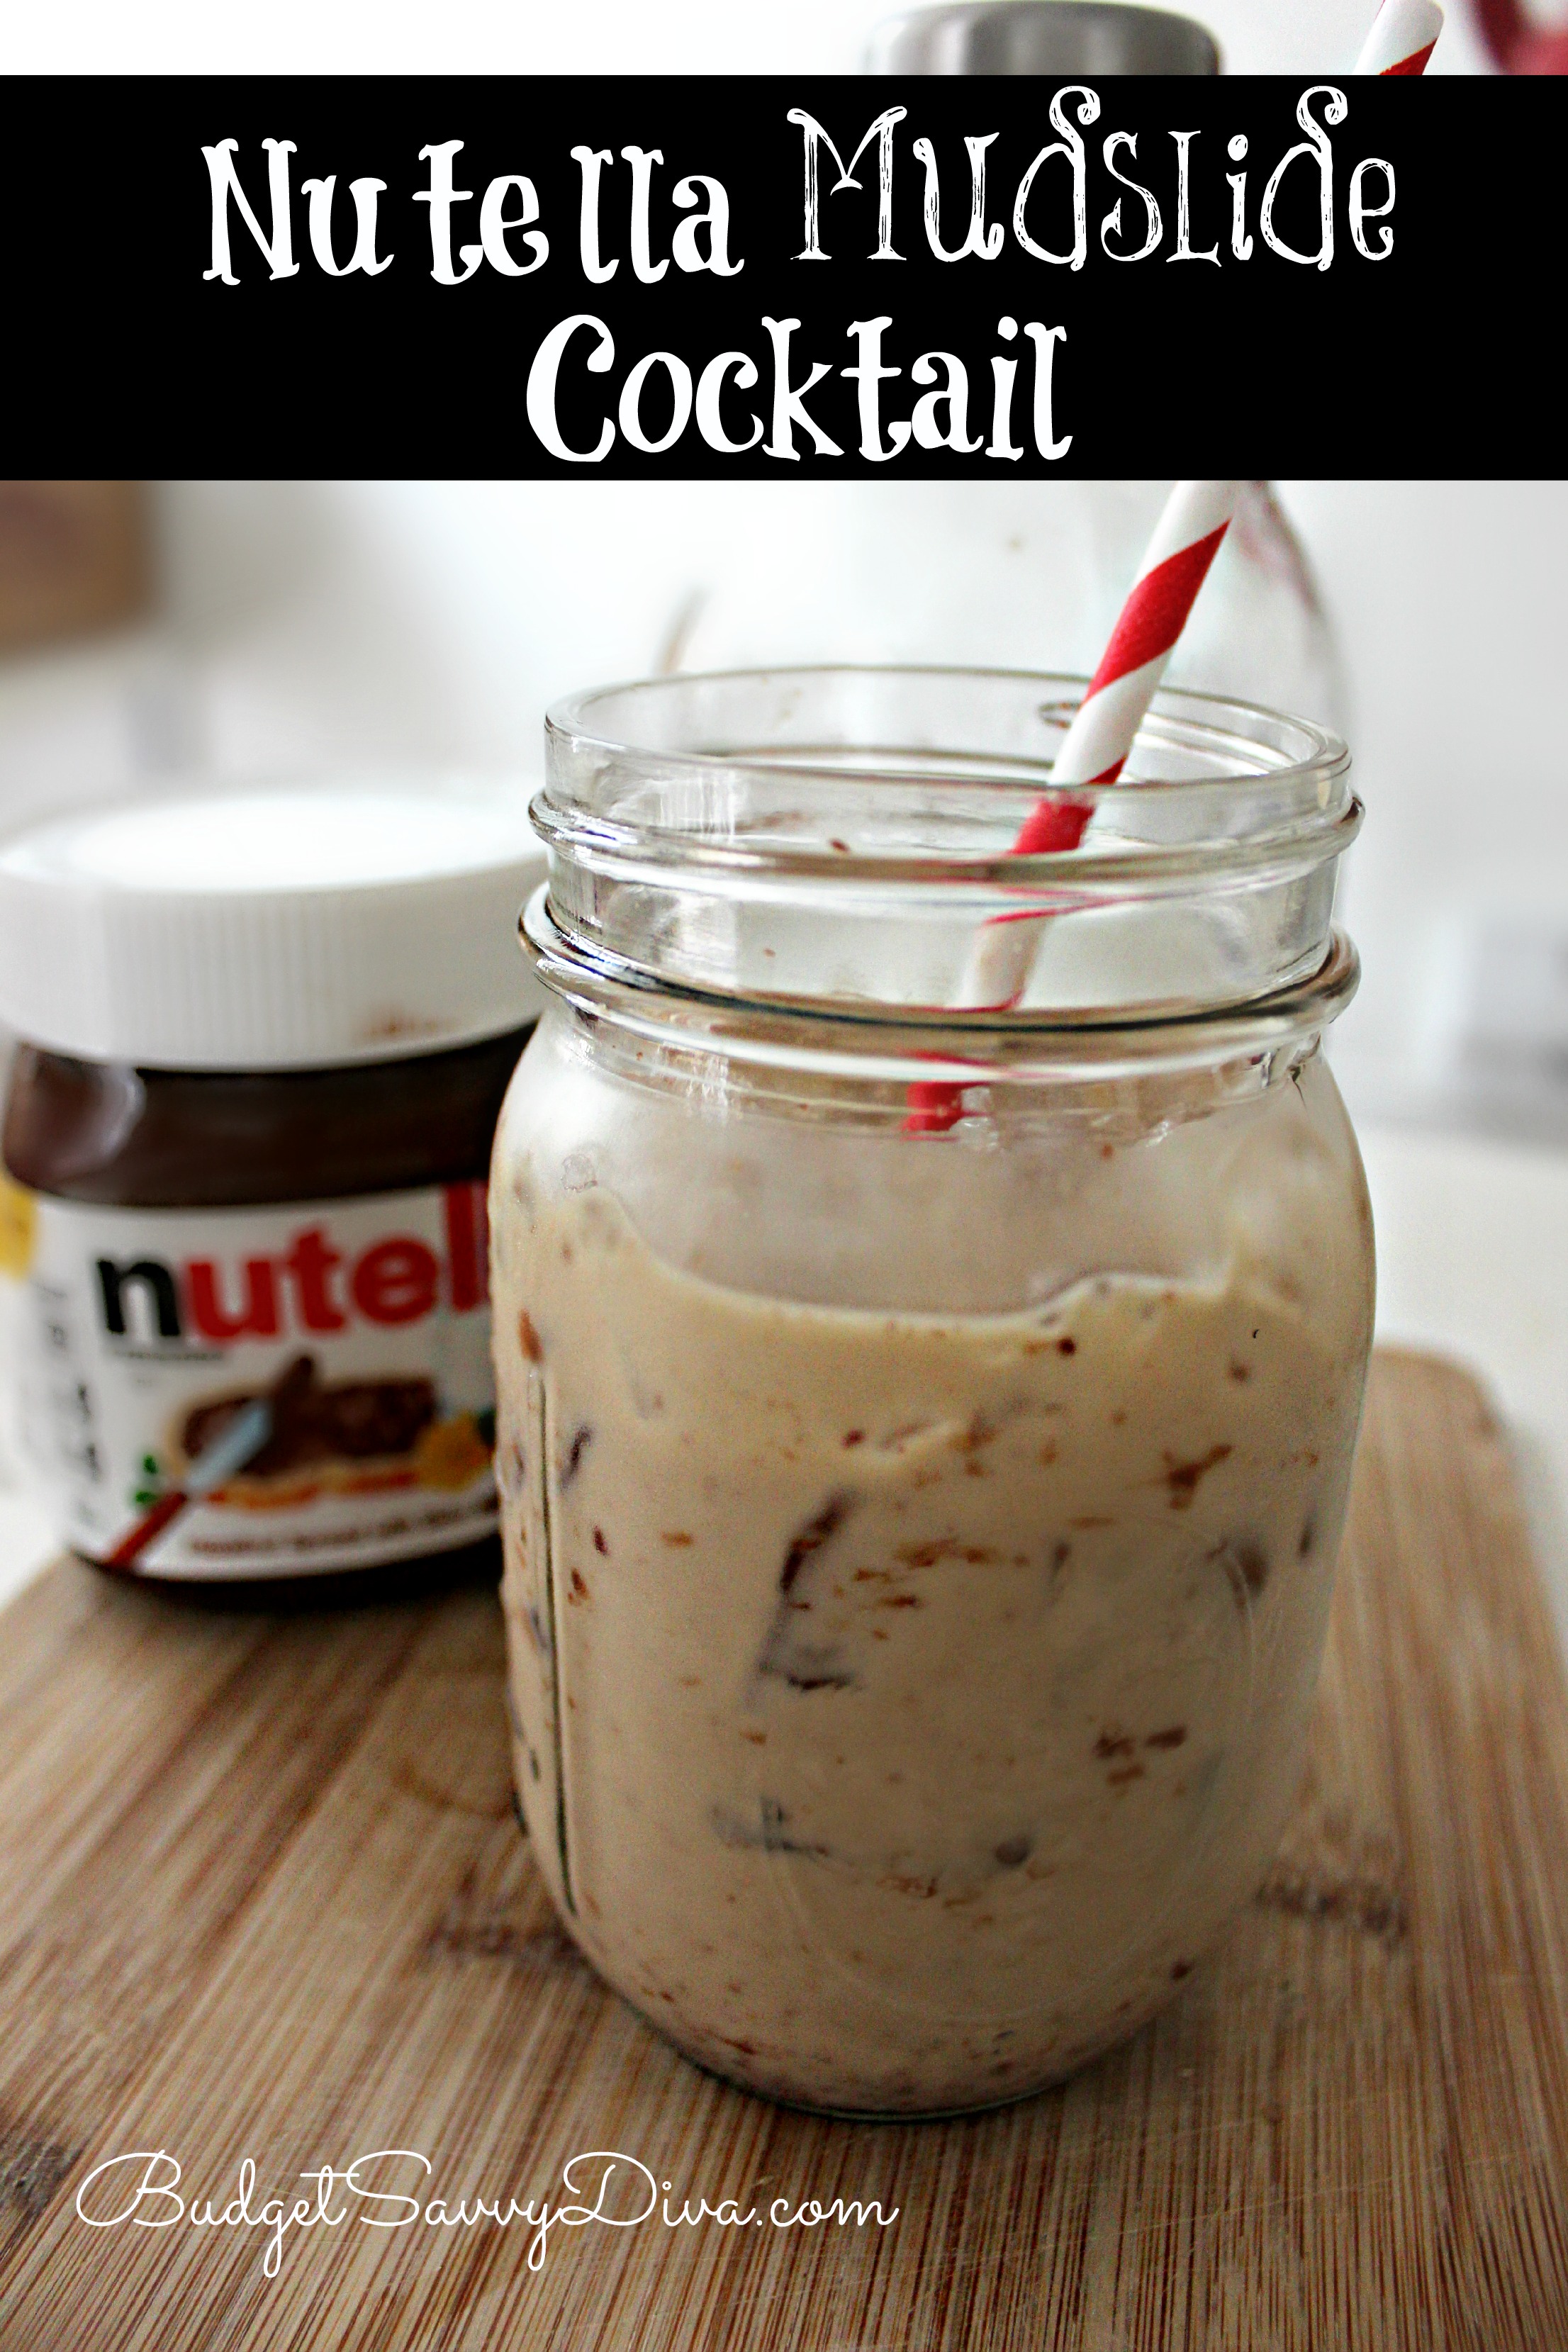 Nutella Mudslide Cocktail Recipe 